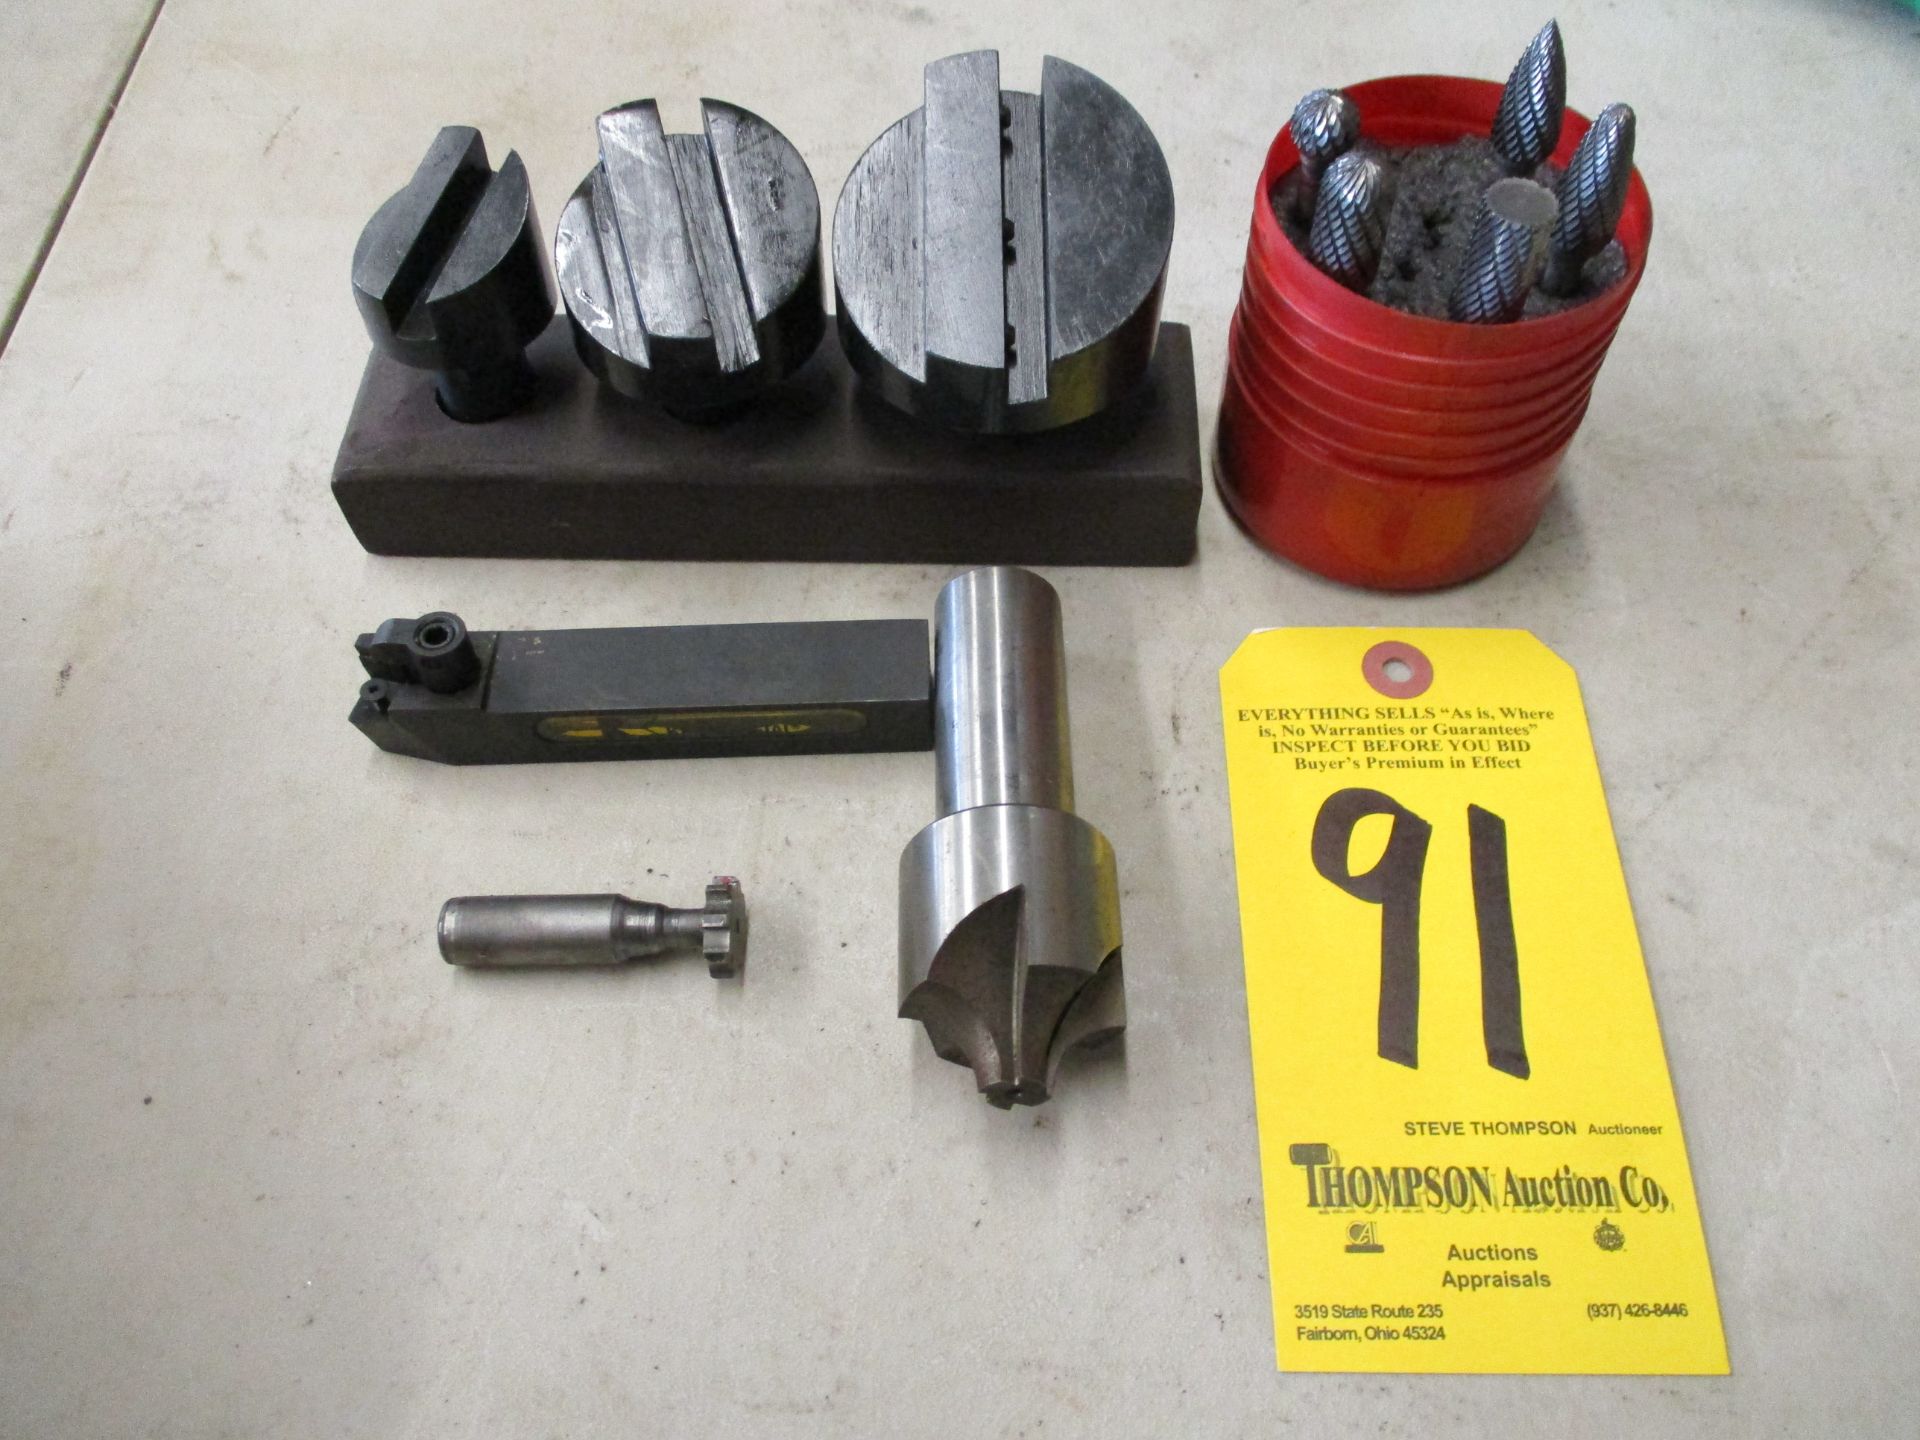 Fly Cutter Set, Burr Bits, Corner Radius Tool, Keyway Cutter, and Carbide Insert Lathe Tool